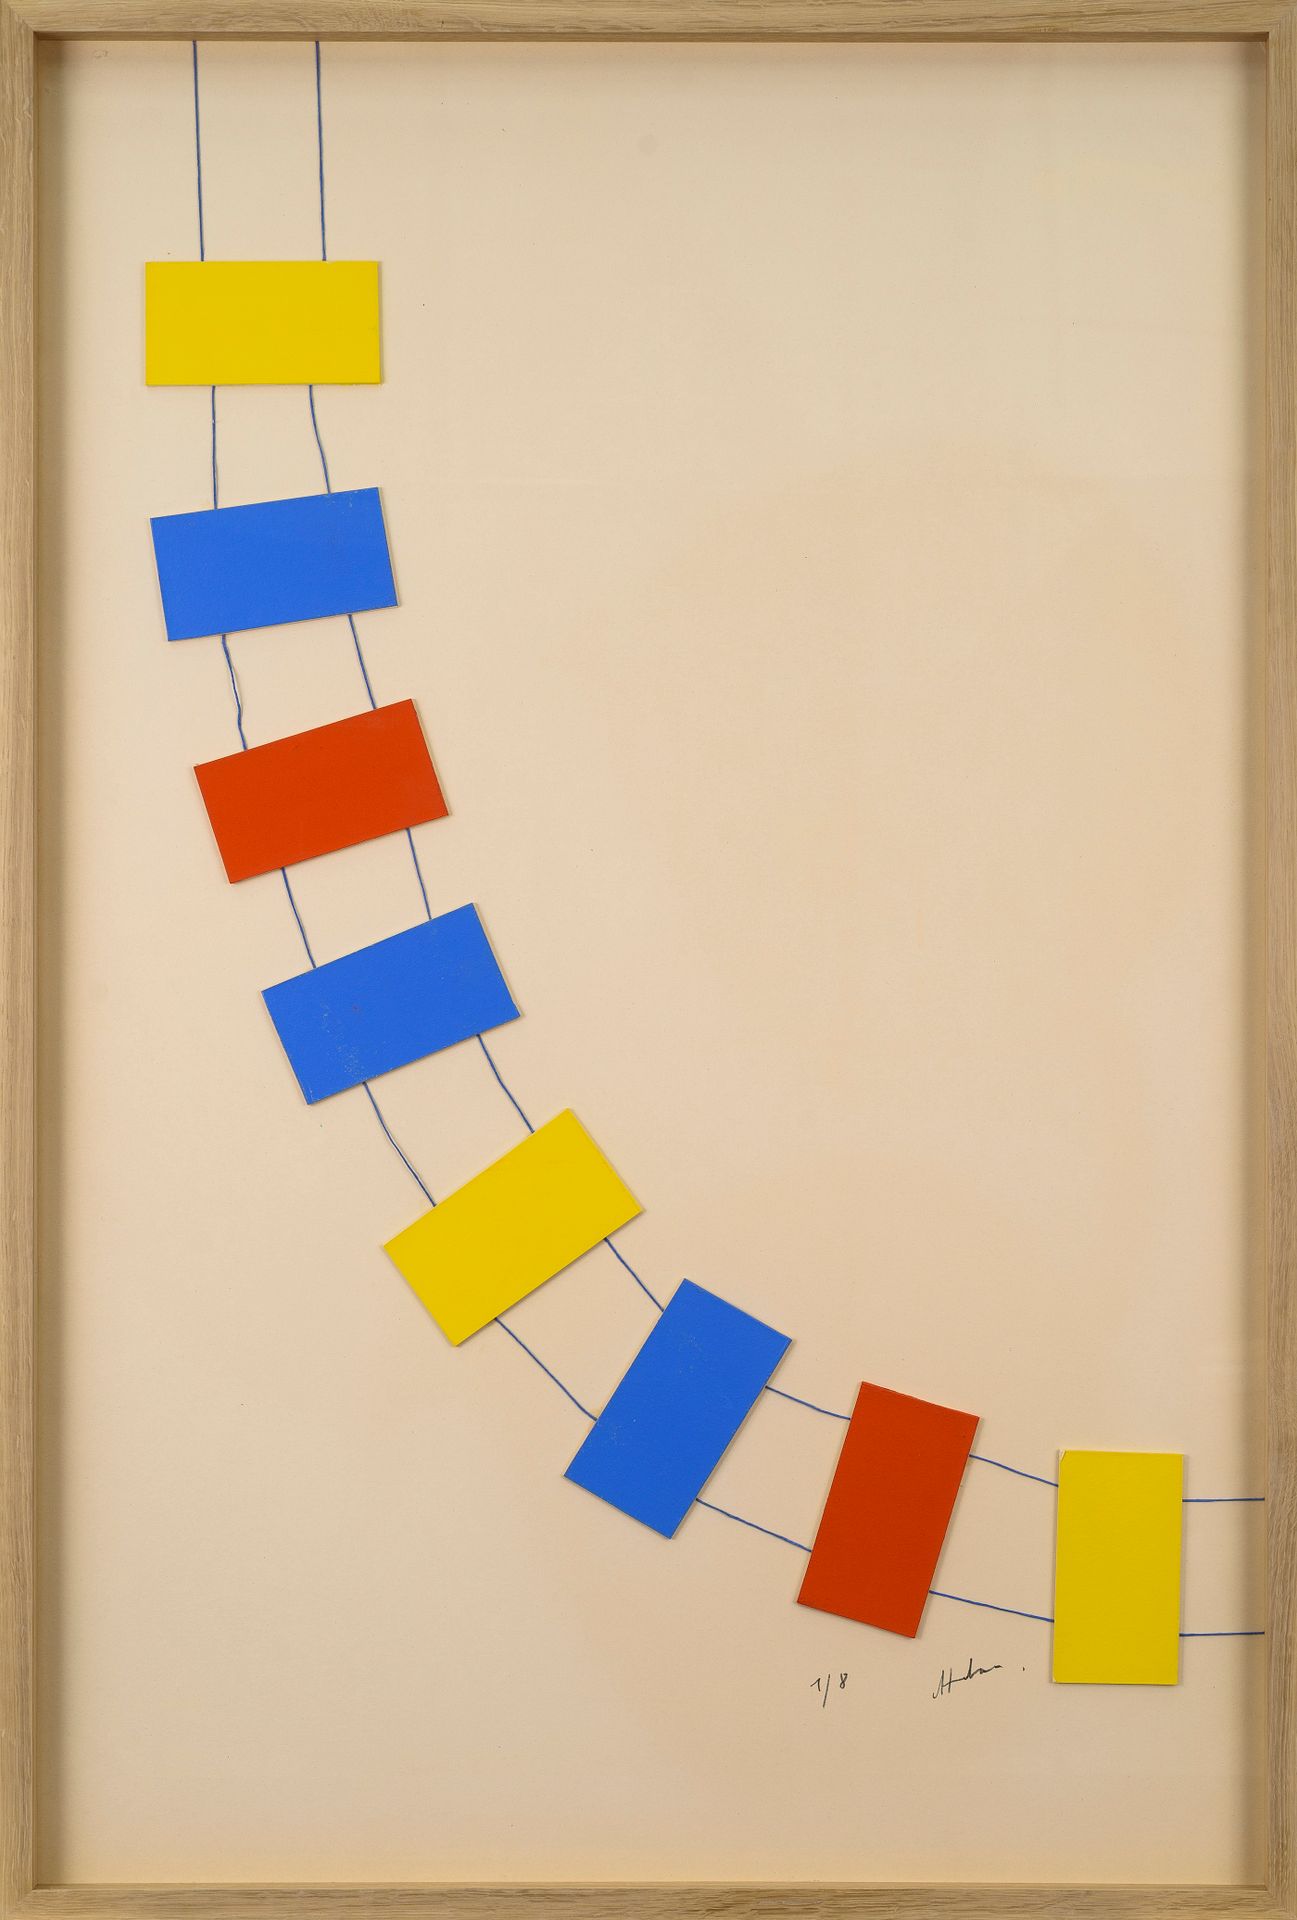 Null 阿尔贝-丘巴克(1925-2008)

几何构成，1980年

有签名和编号的拼贴画 1/8

119 x 78 cm

有框